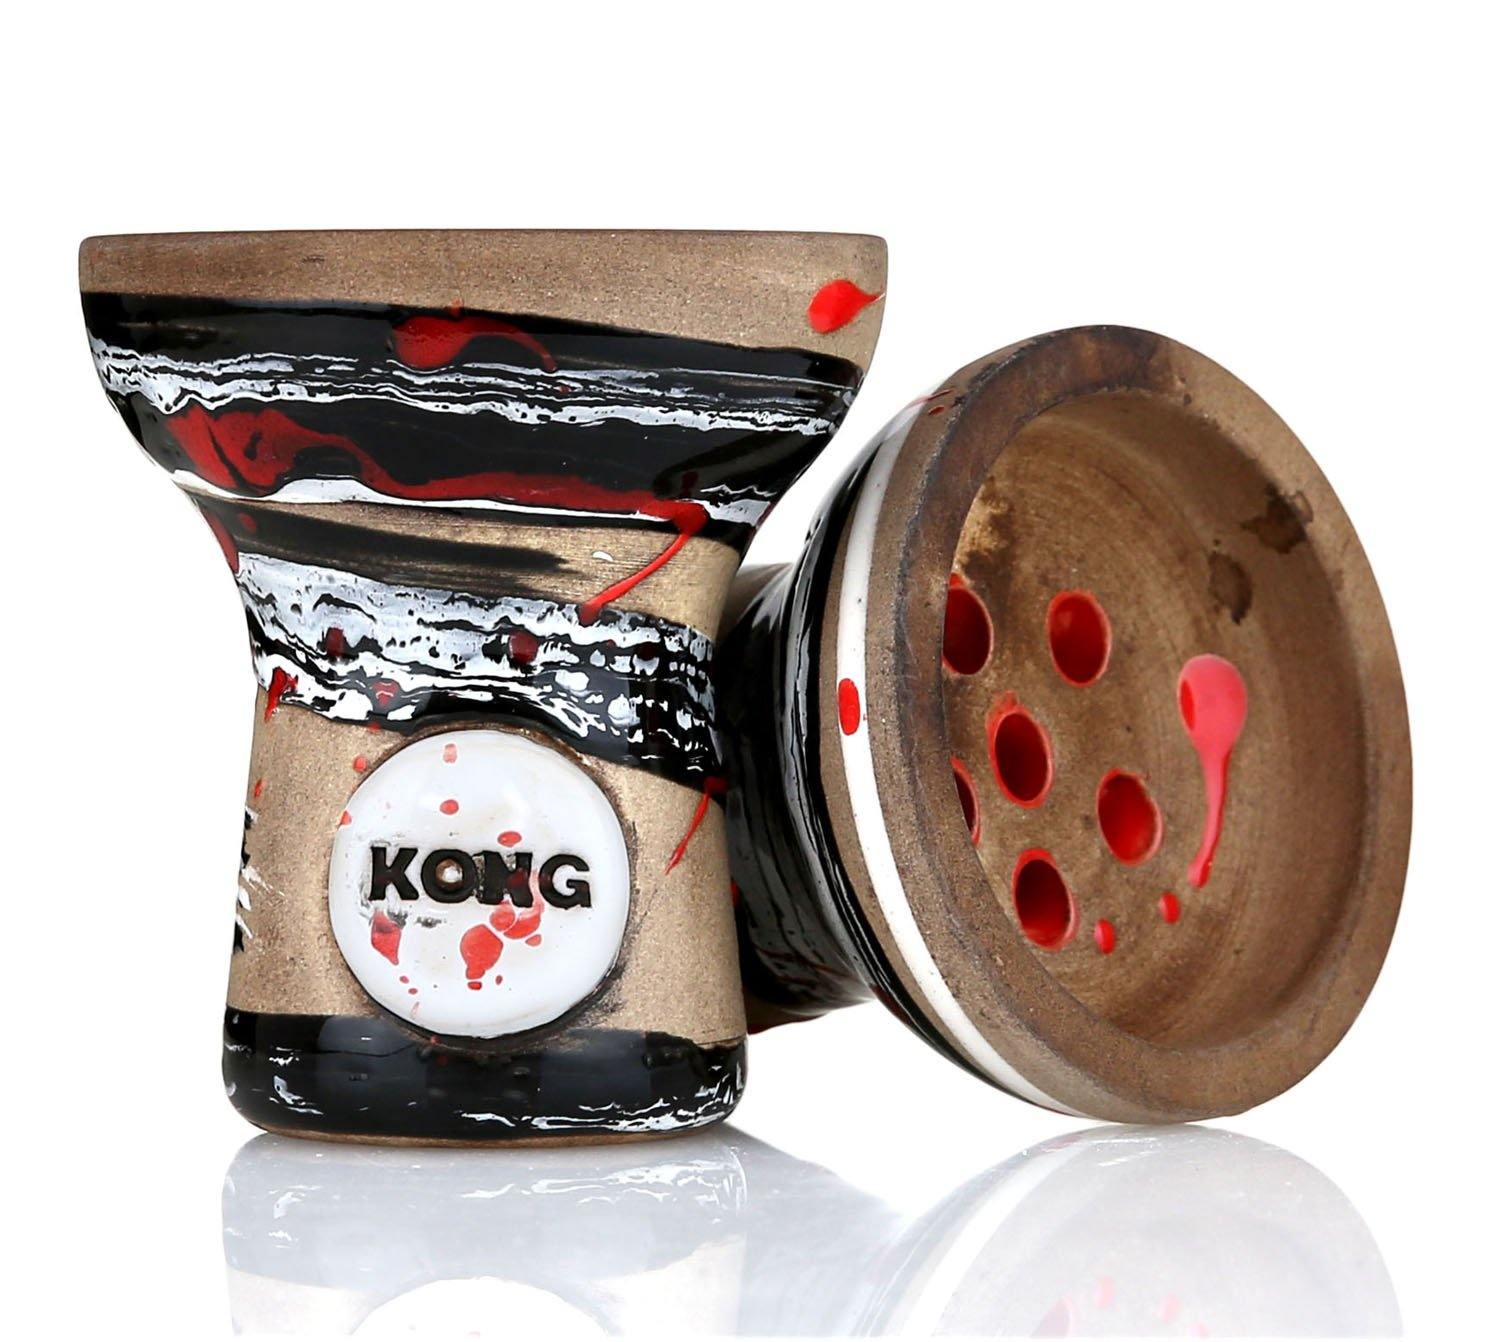 Kong Turkish Boy Space Glazed Bowl -  Dracula Black